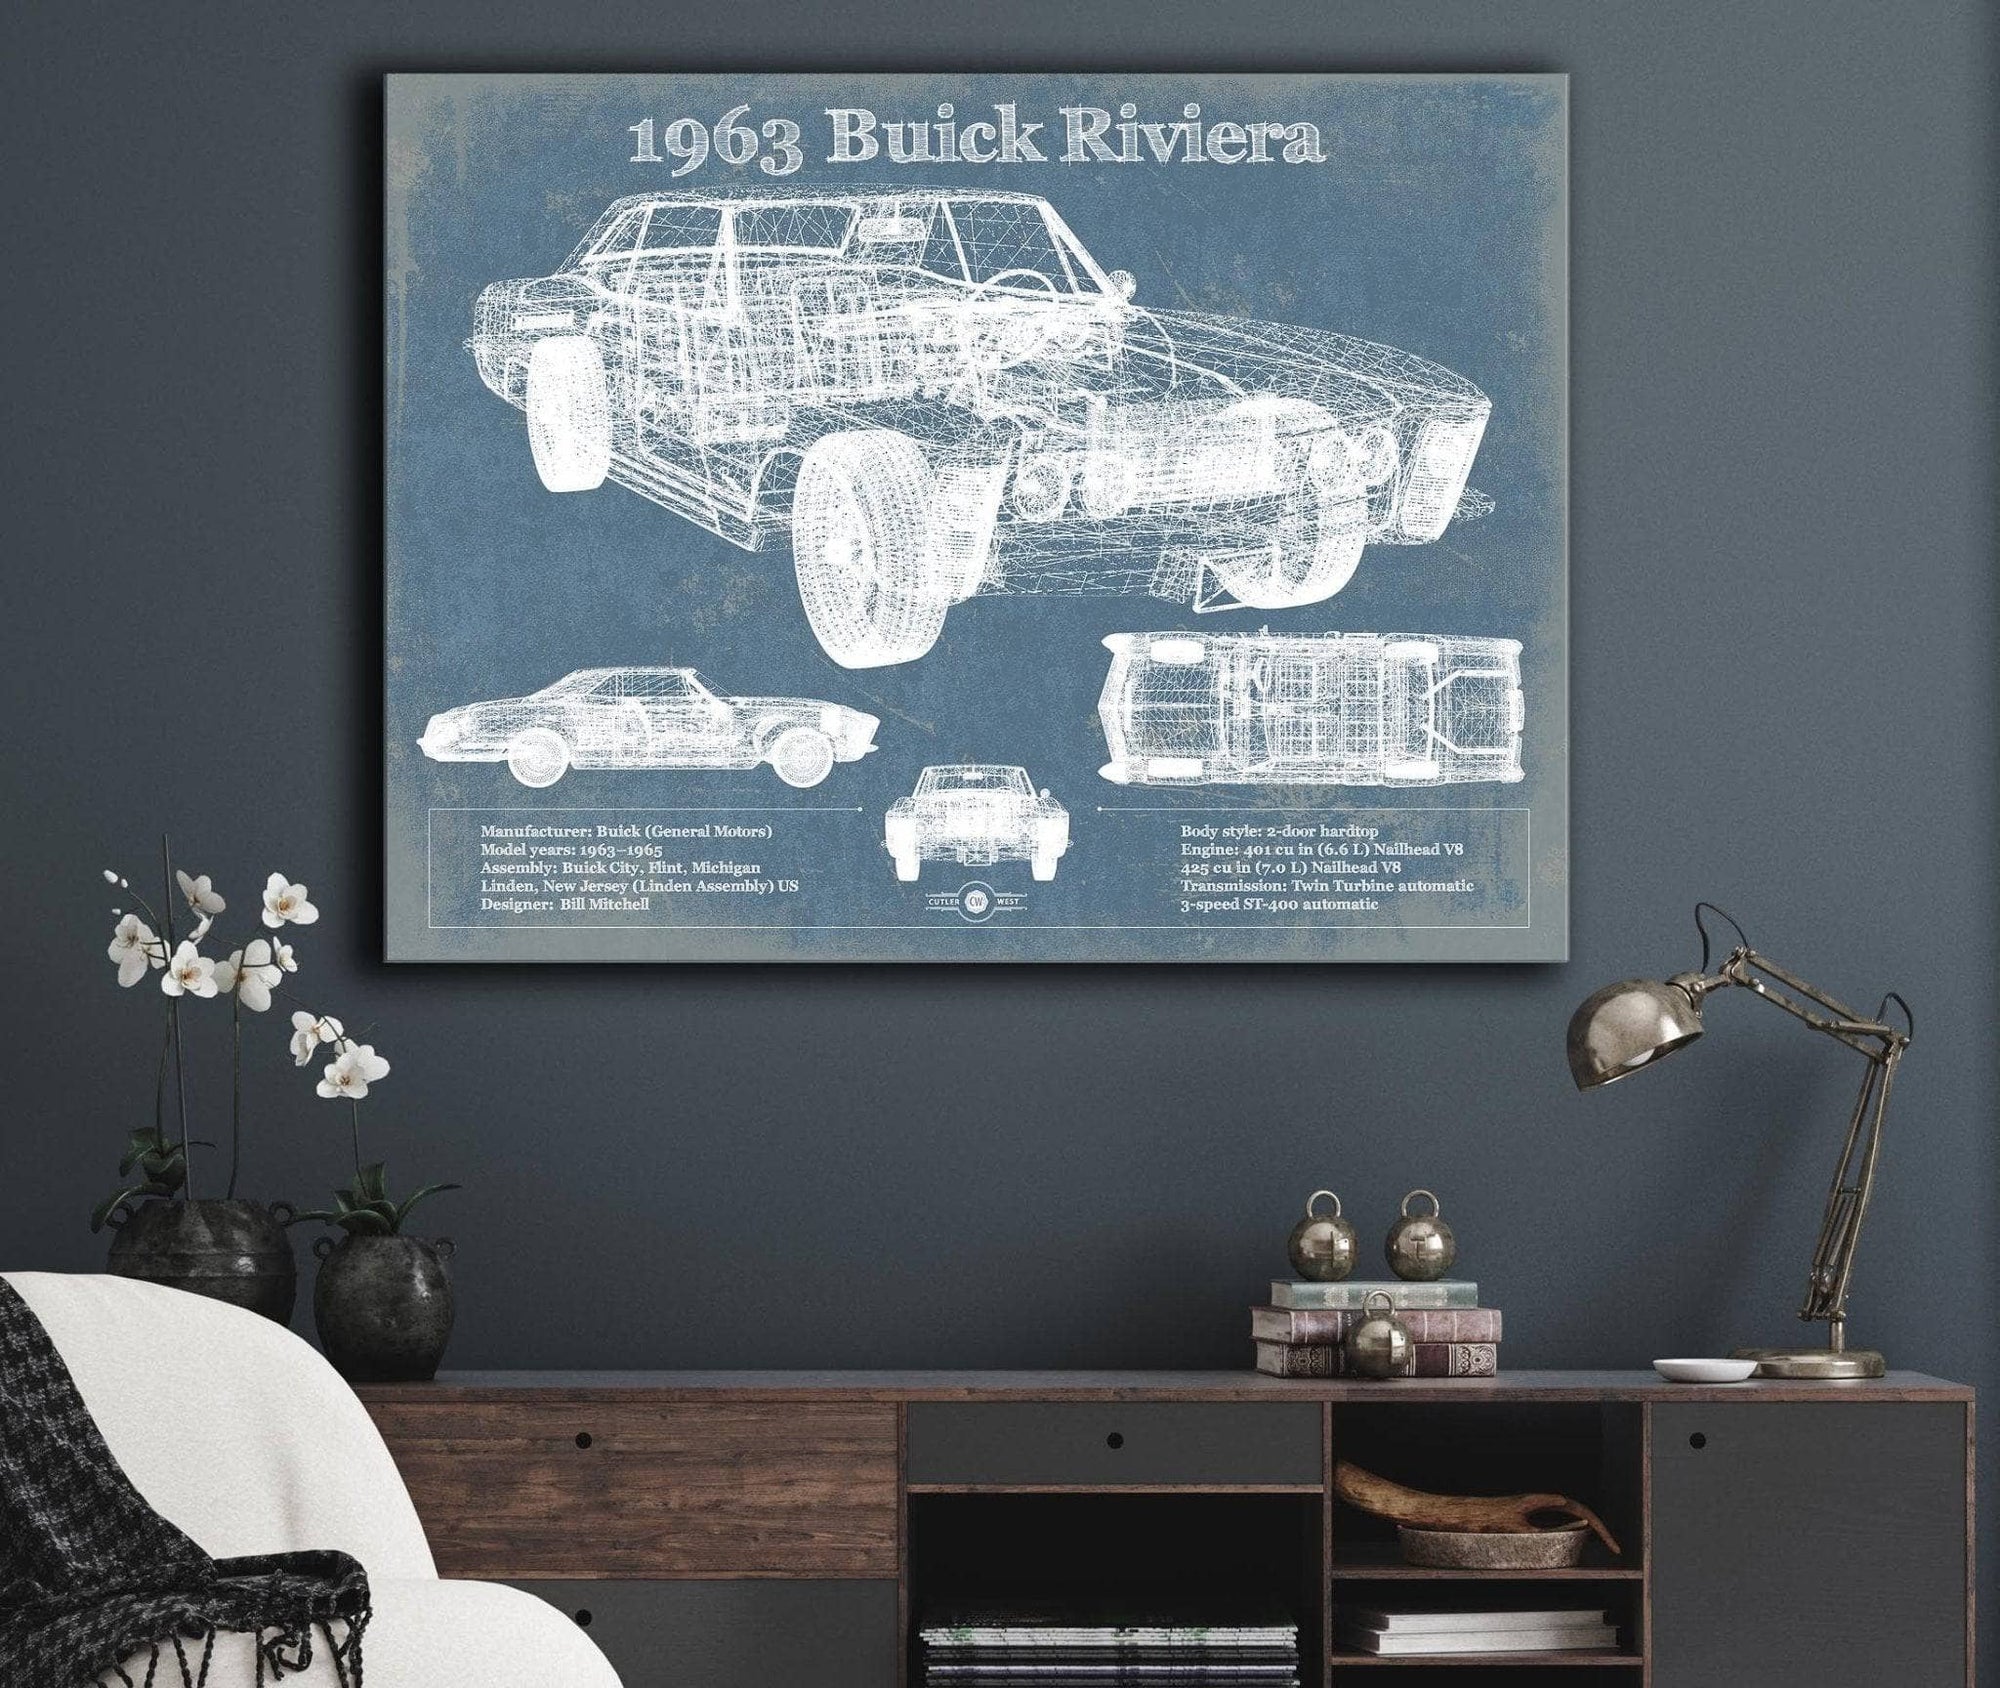 Cutler West Chevrolet Collection 1963 Buick Riviera Vintage Blueprint Auto Print